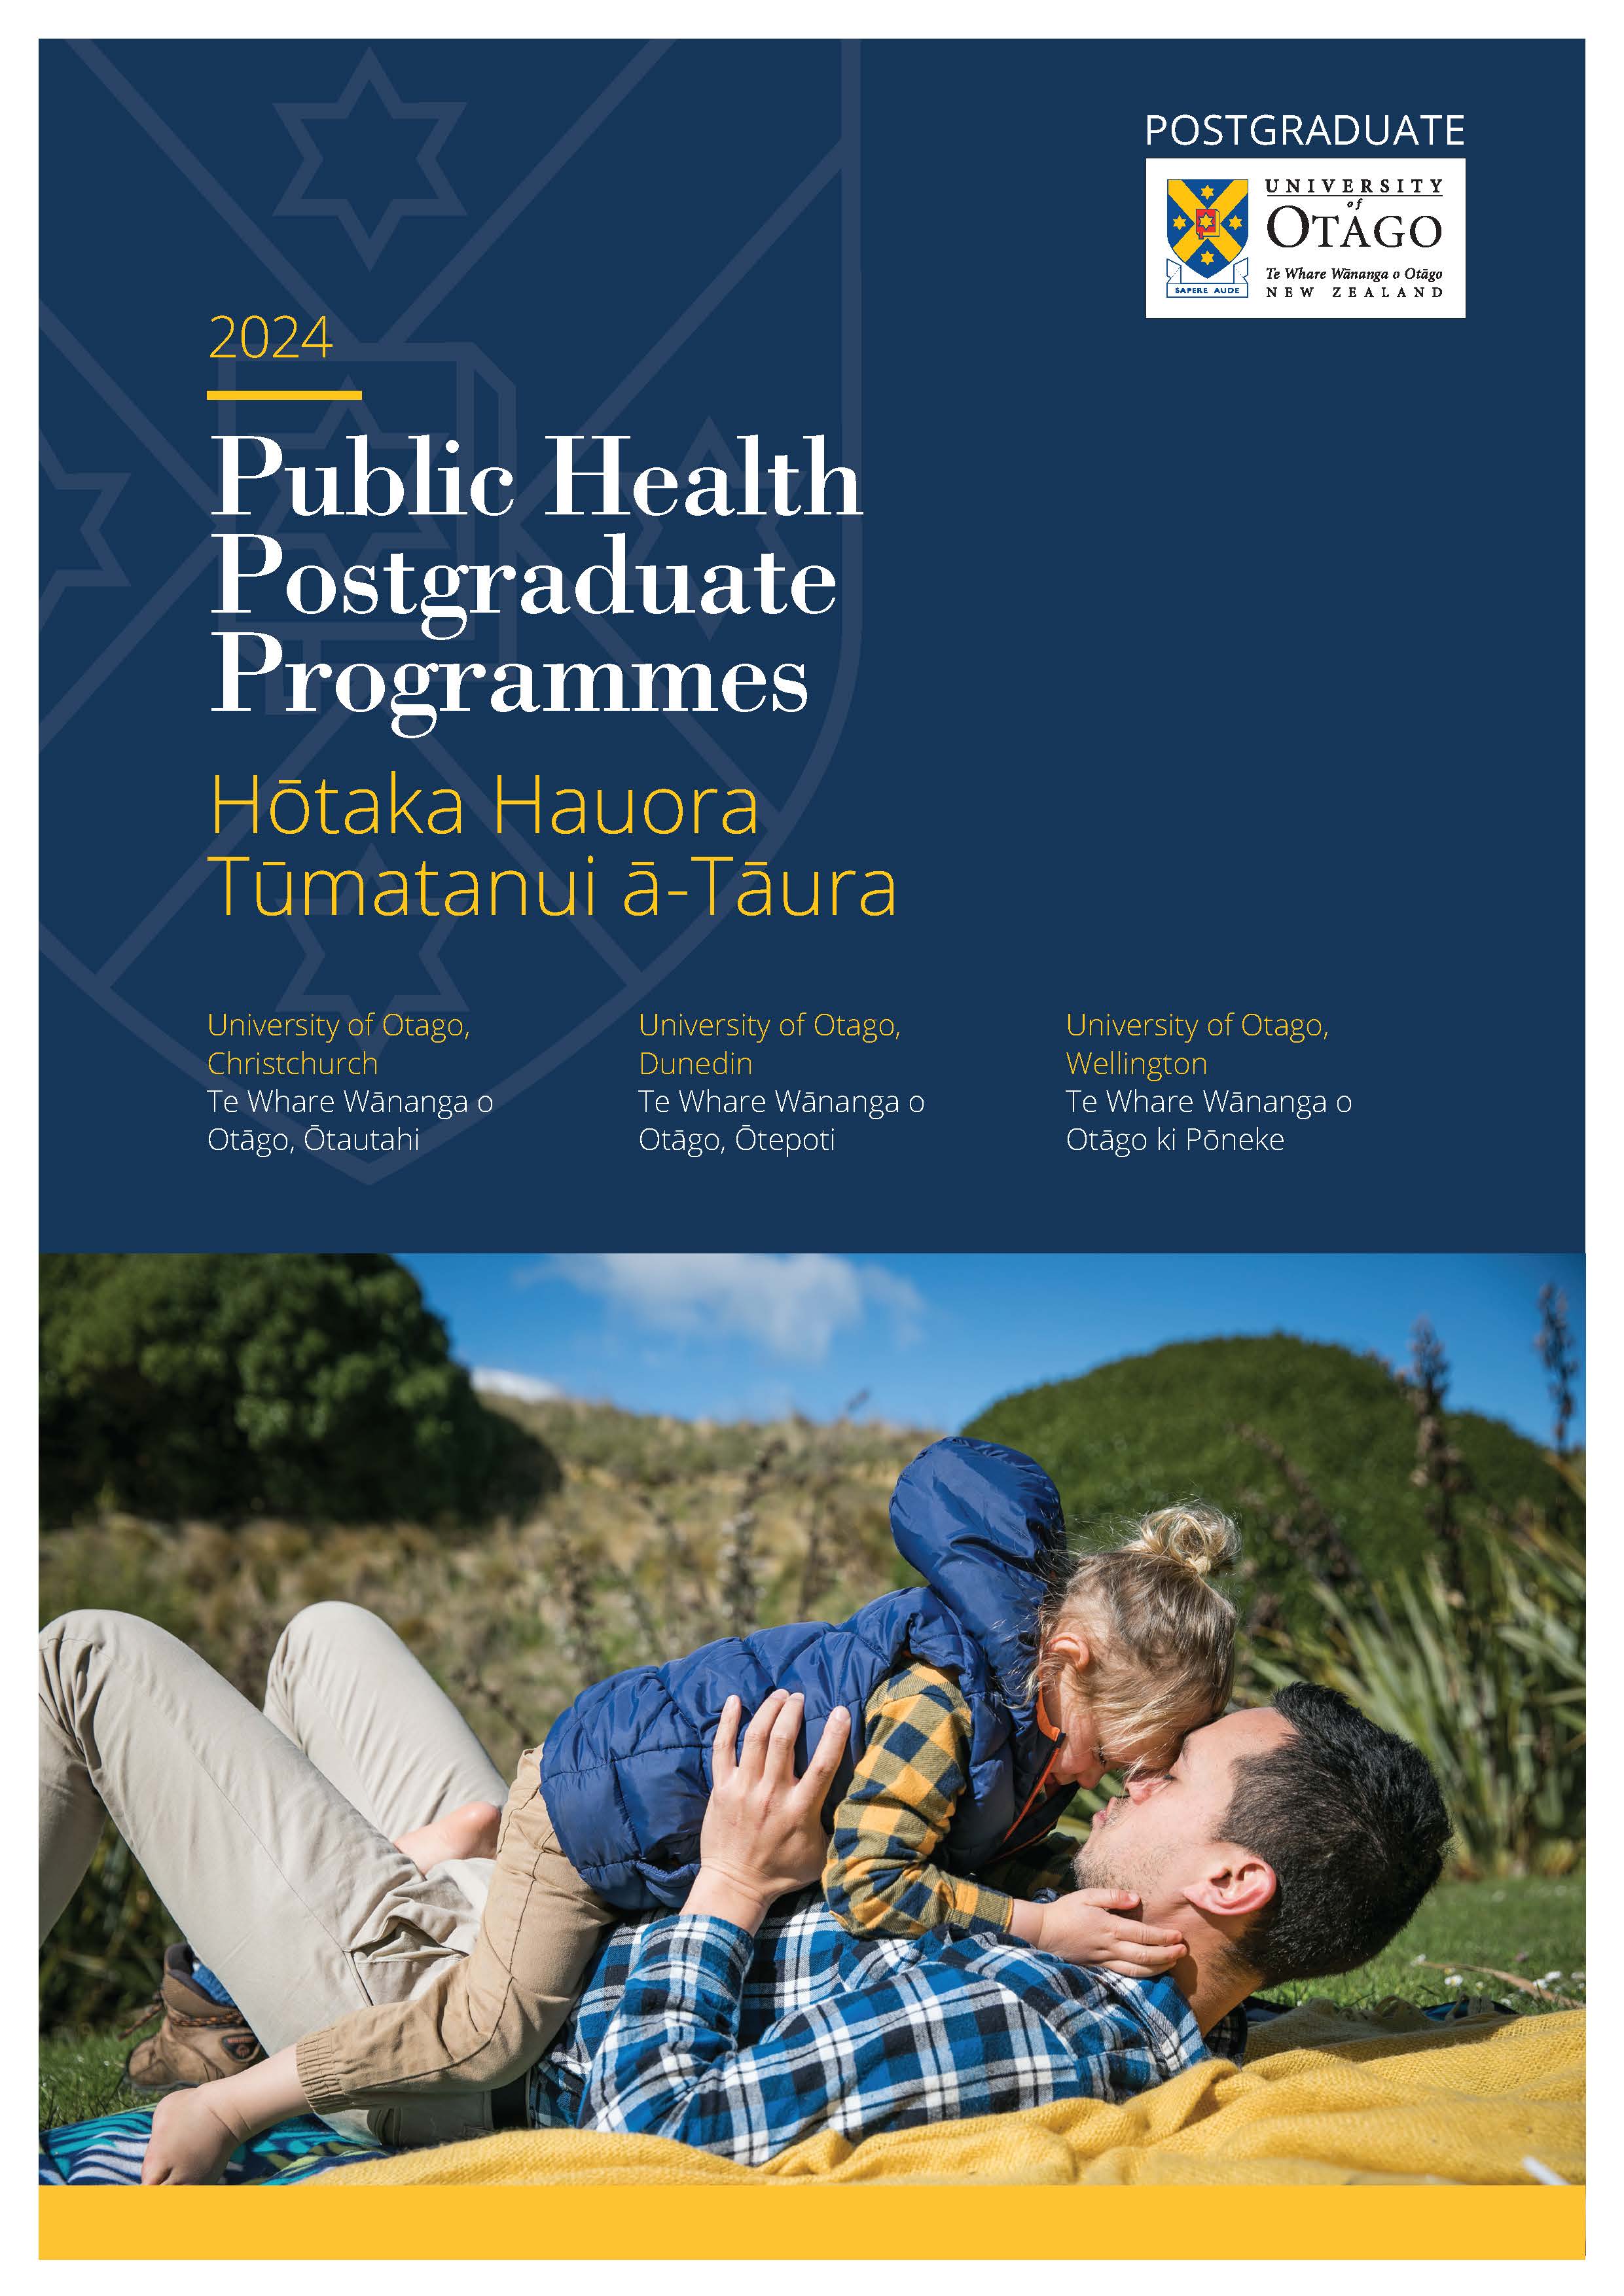 Cover image of Public Health Postgraduate programmes prospectus